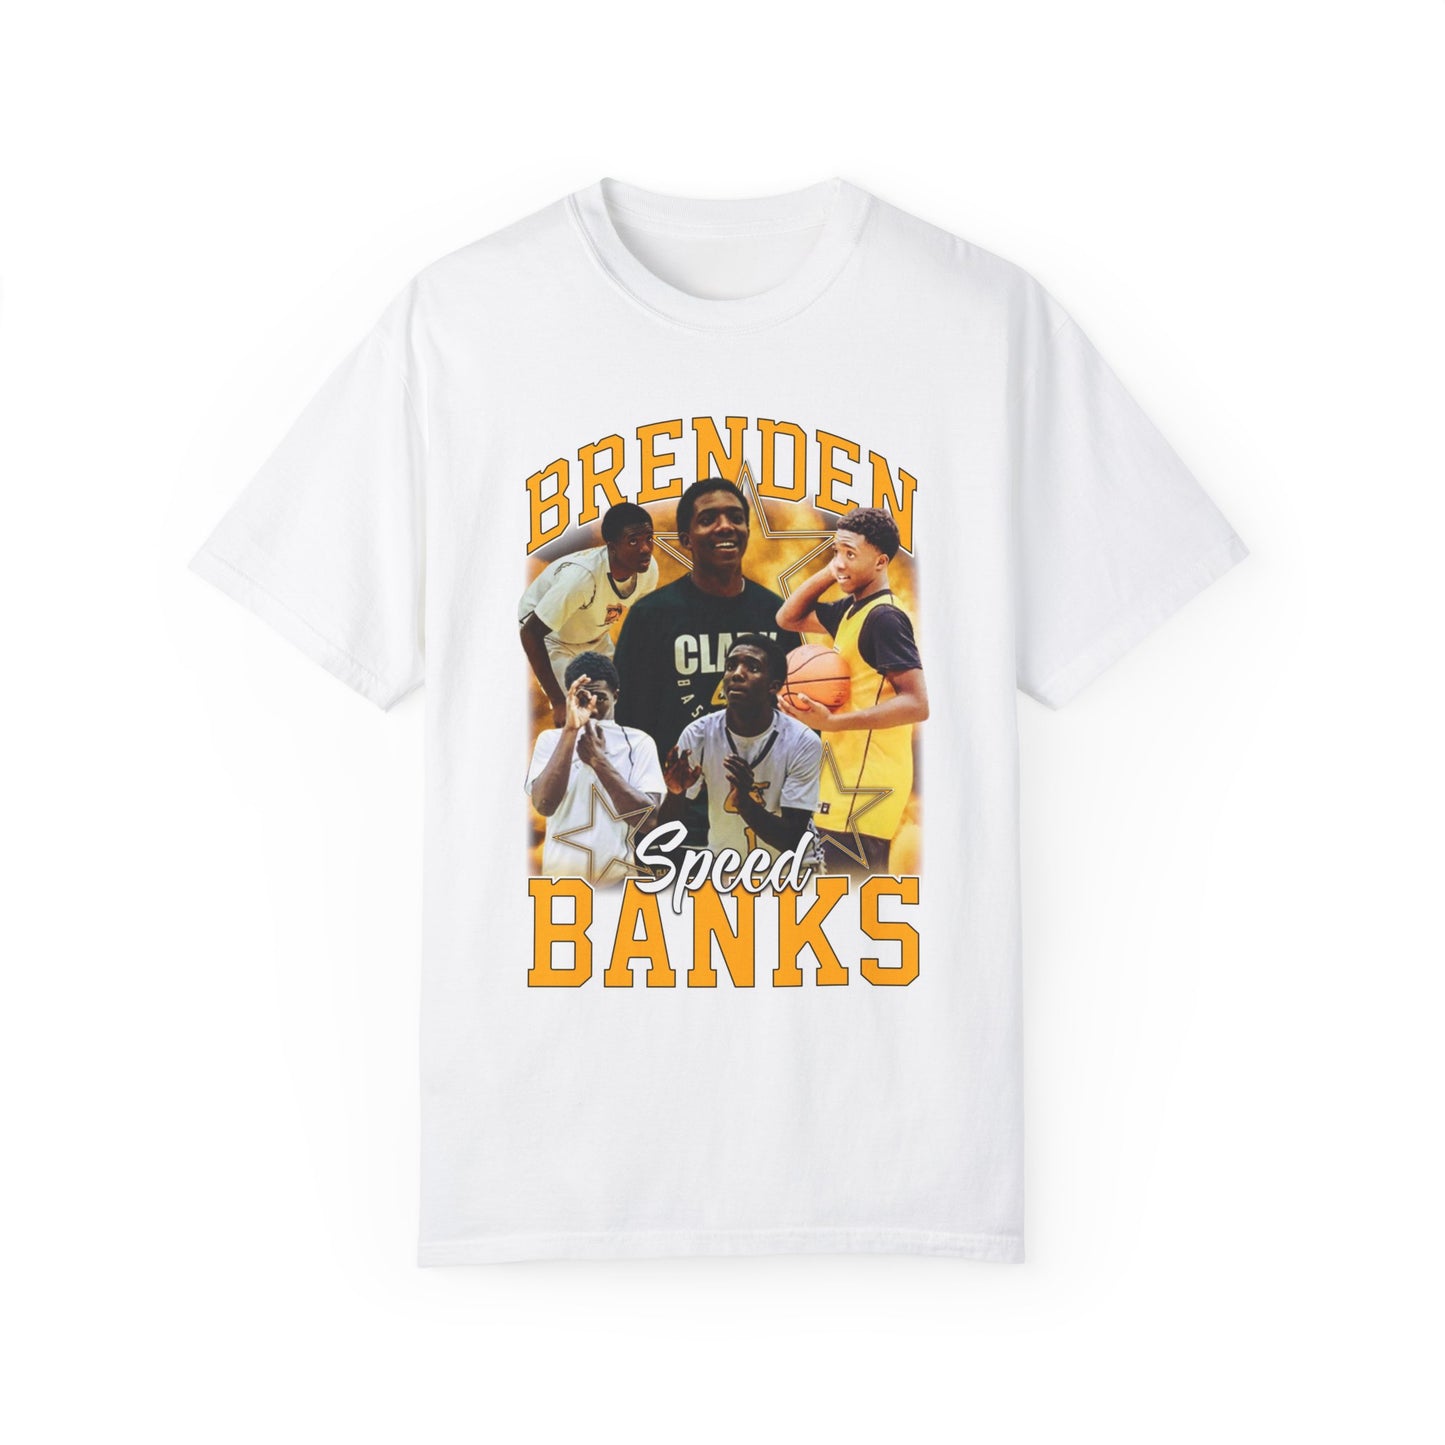 Brenden Banks Graphic T-shirt